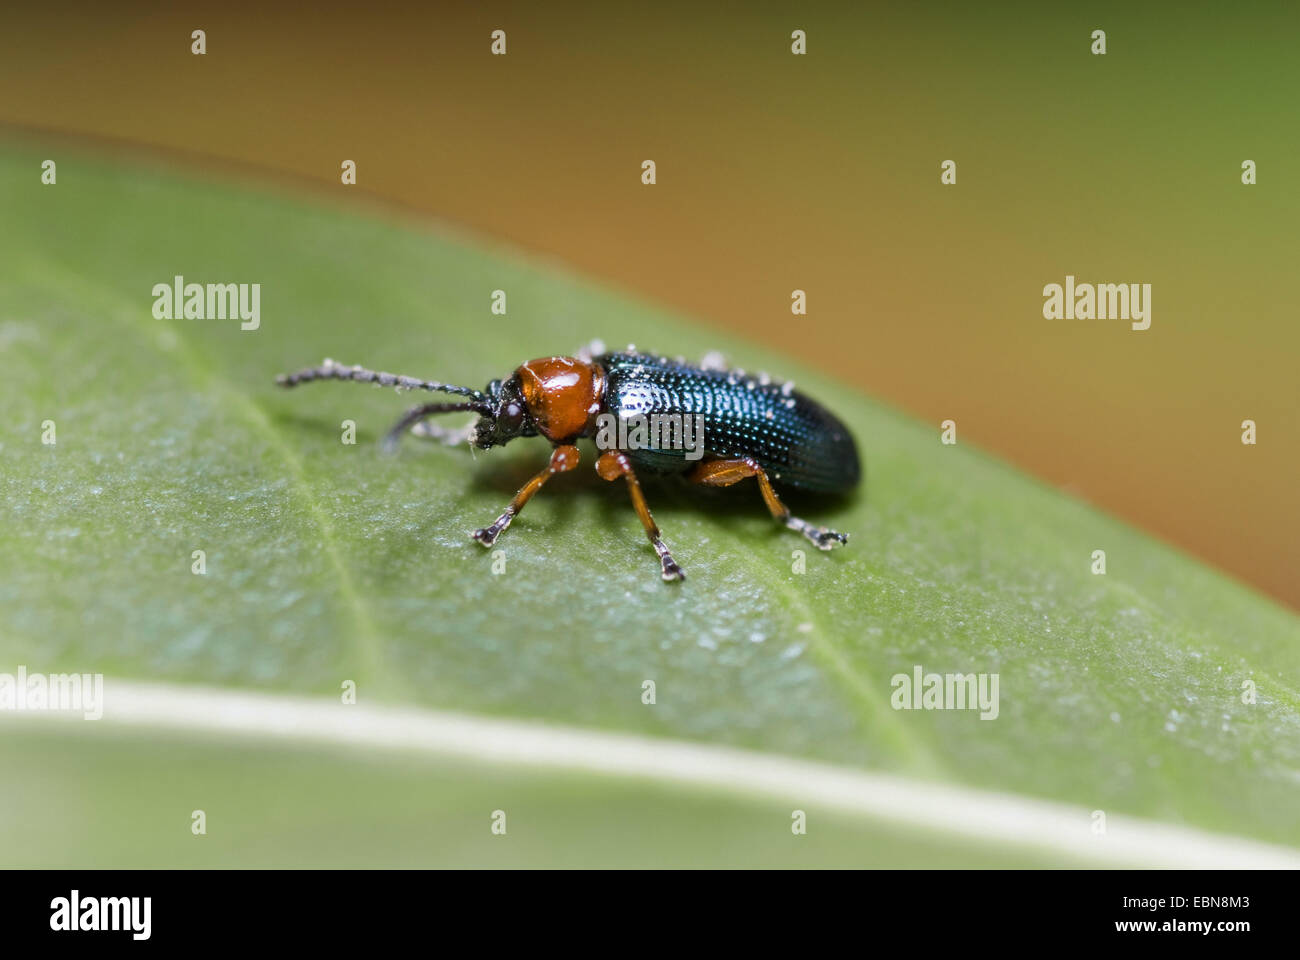 cereal leaf beetle (oat leaf beetle, barley leaf beetle),Cereal Leaf Beetle (Lema melanopus, Oulema melanopus-duftschmidi), on a leaf, Germany Stock Photo